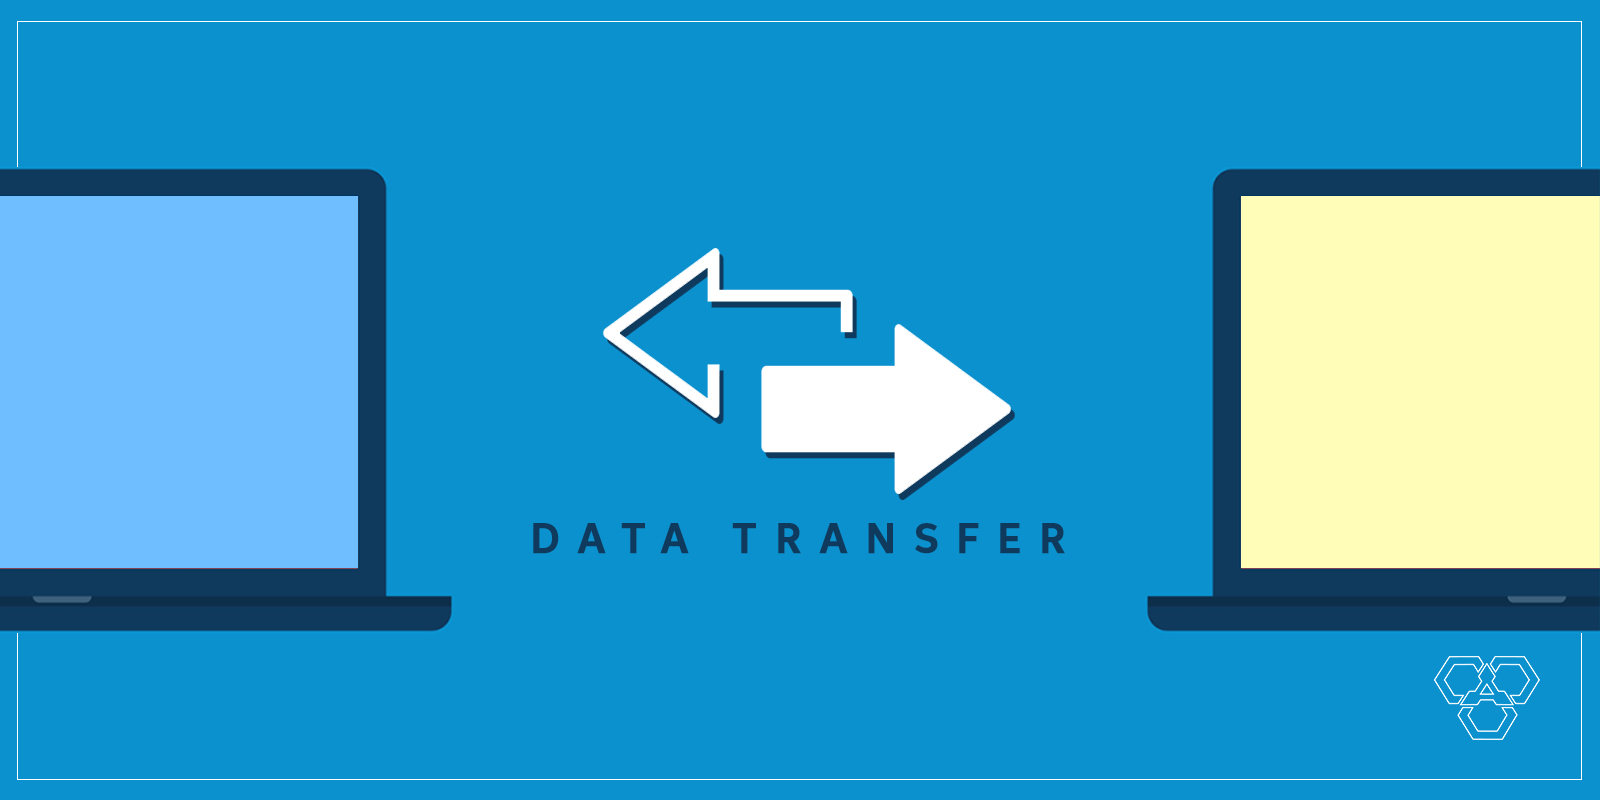 Data Transfers